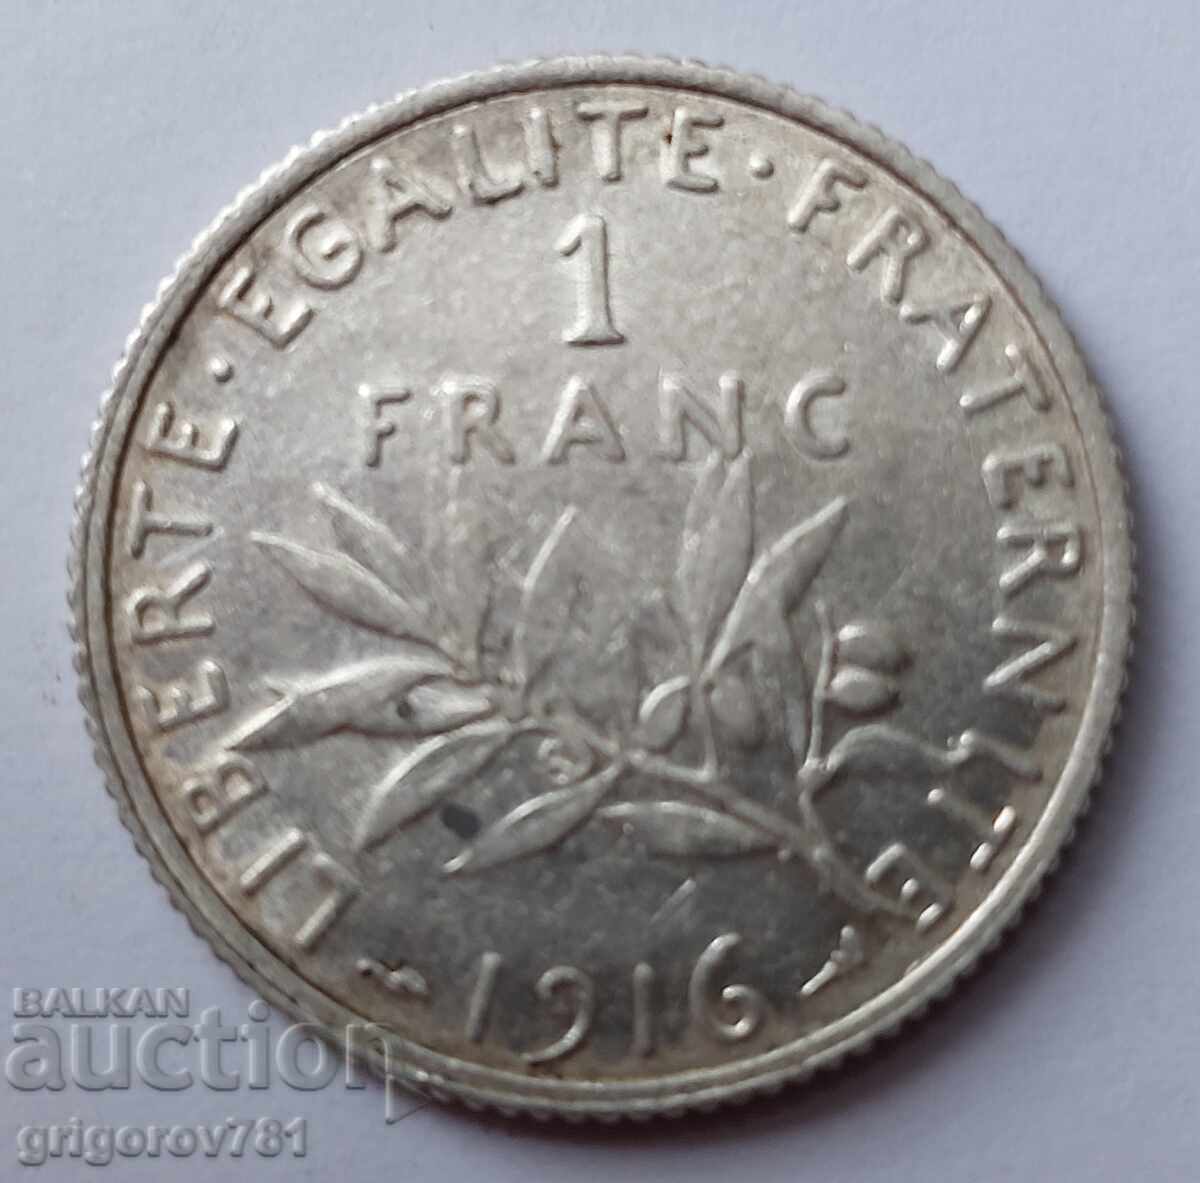 1 franc silver France 1916 - silver coin №6